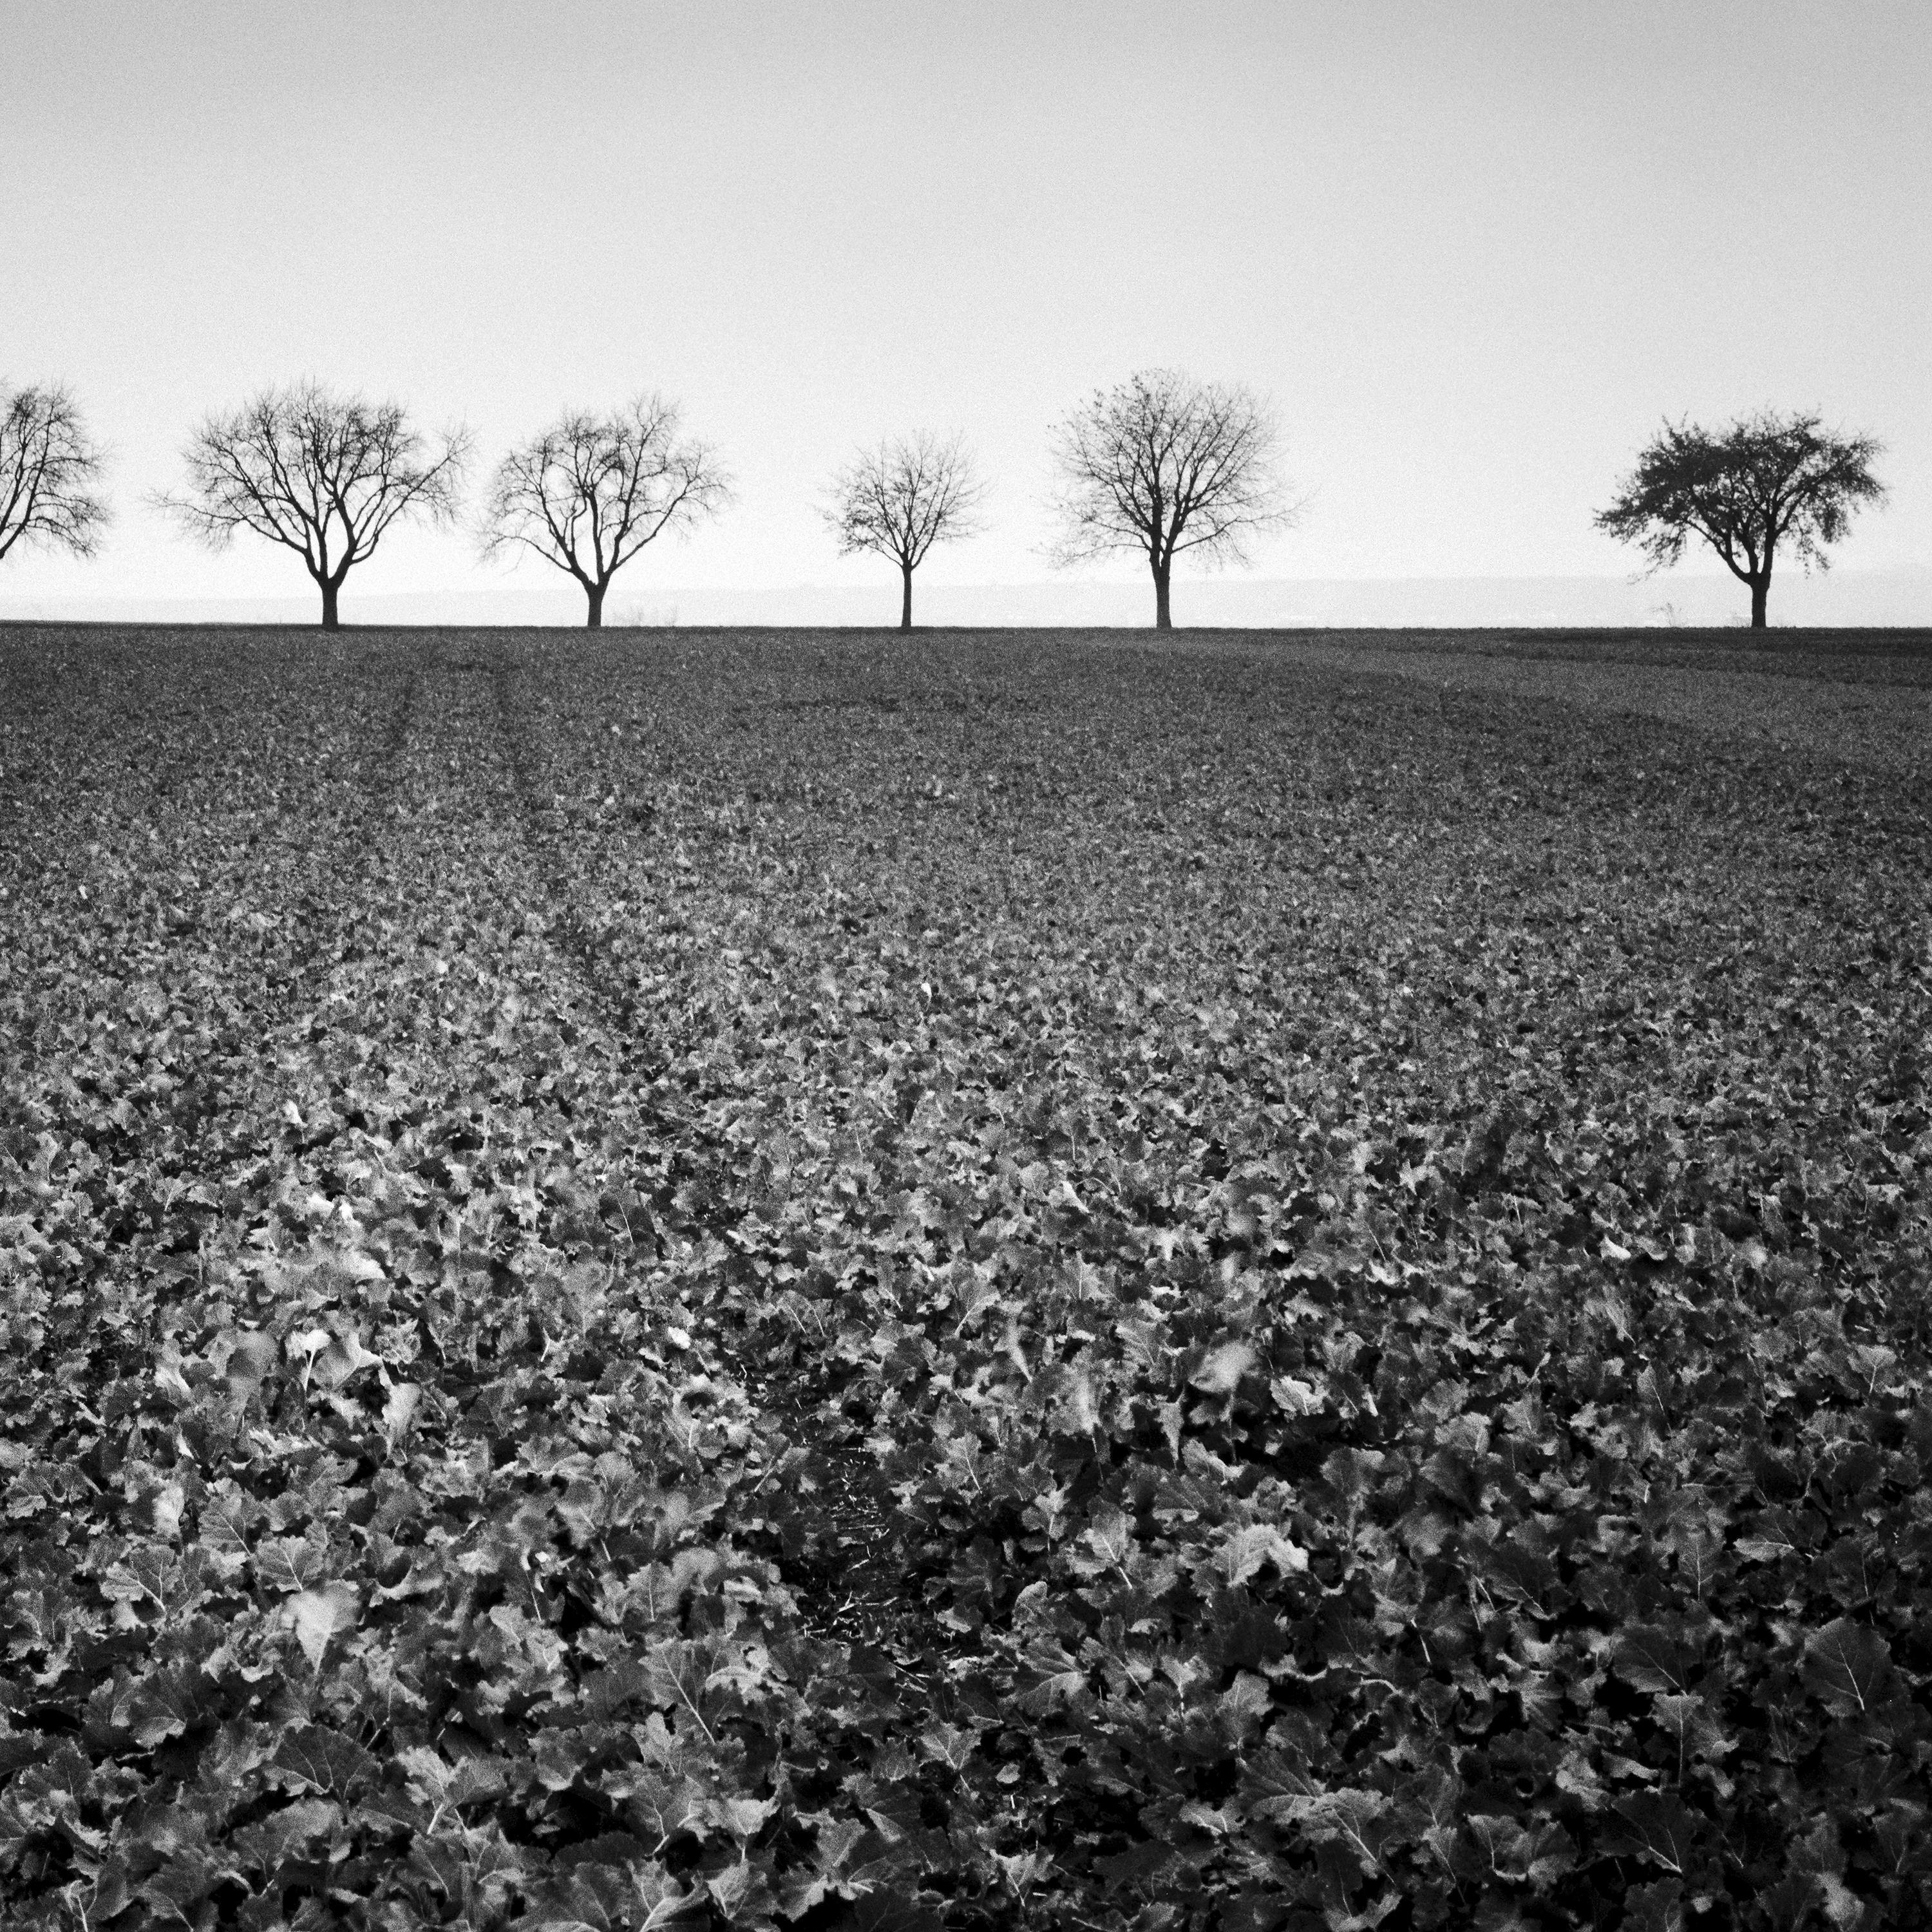 Nine Cherry Trees, Avenue, Austria, black and white landscape photography For Sale 2